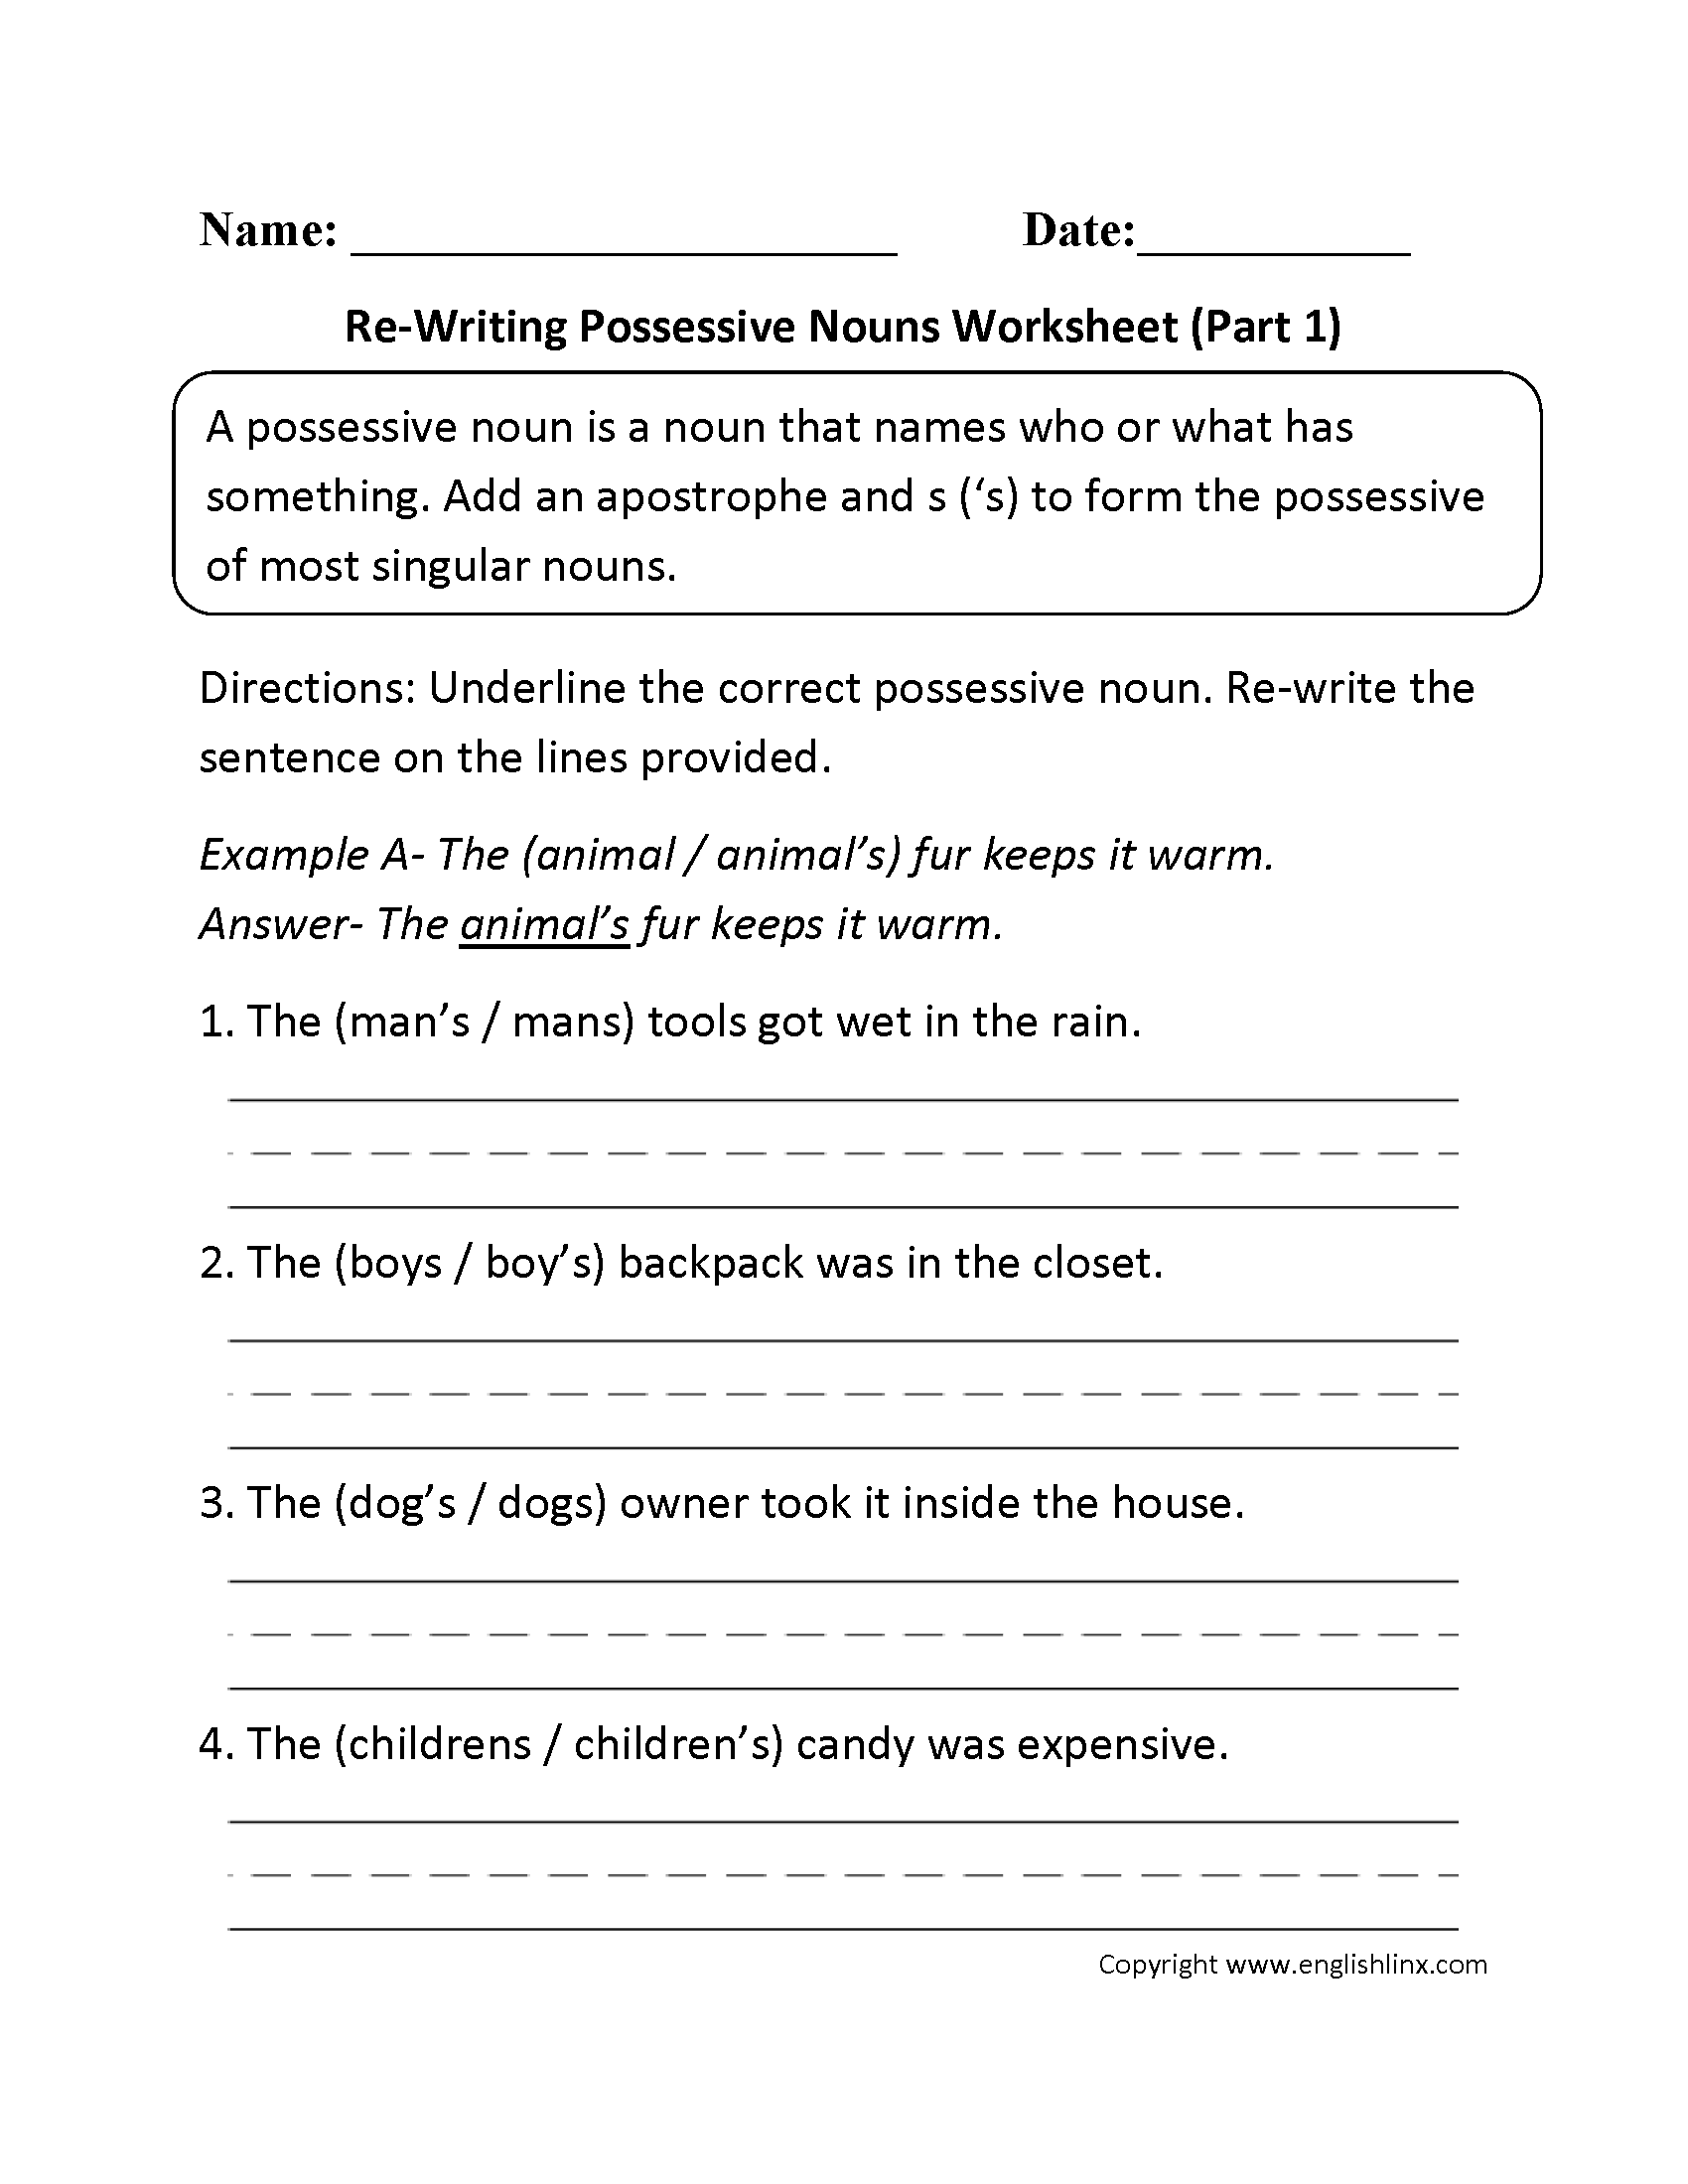 Re-Writing Possessive Nouns Worksheet Part 1